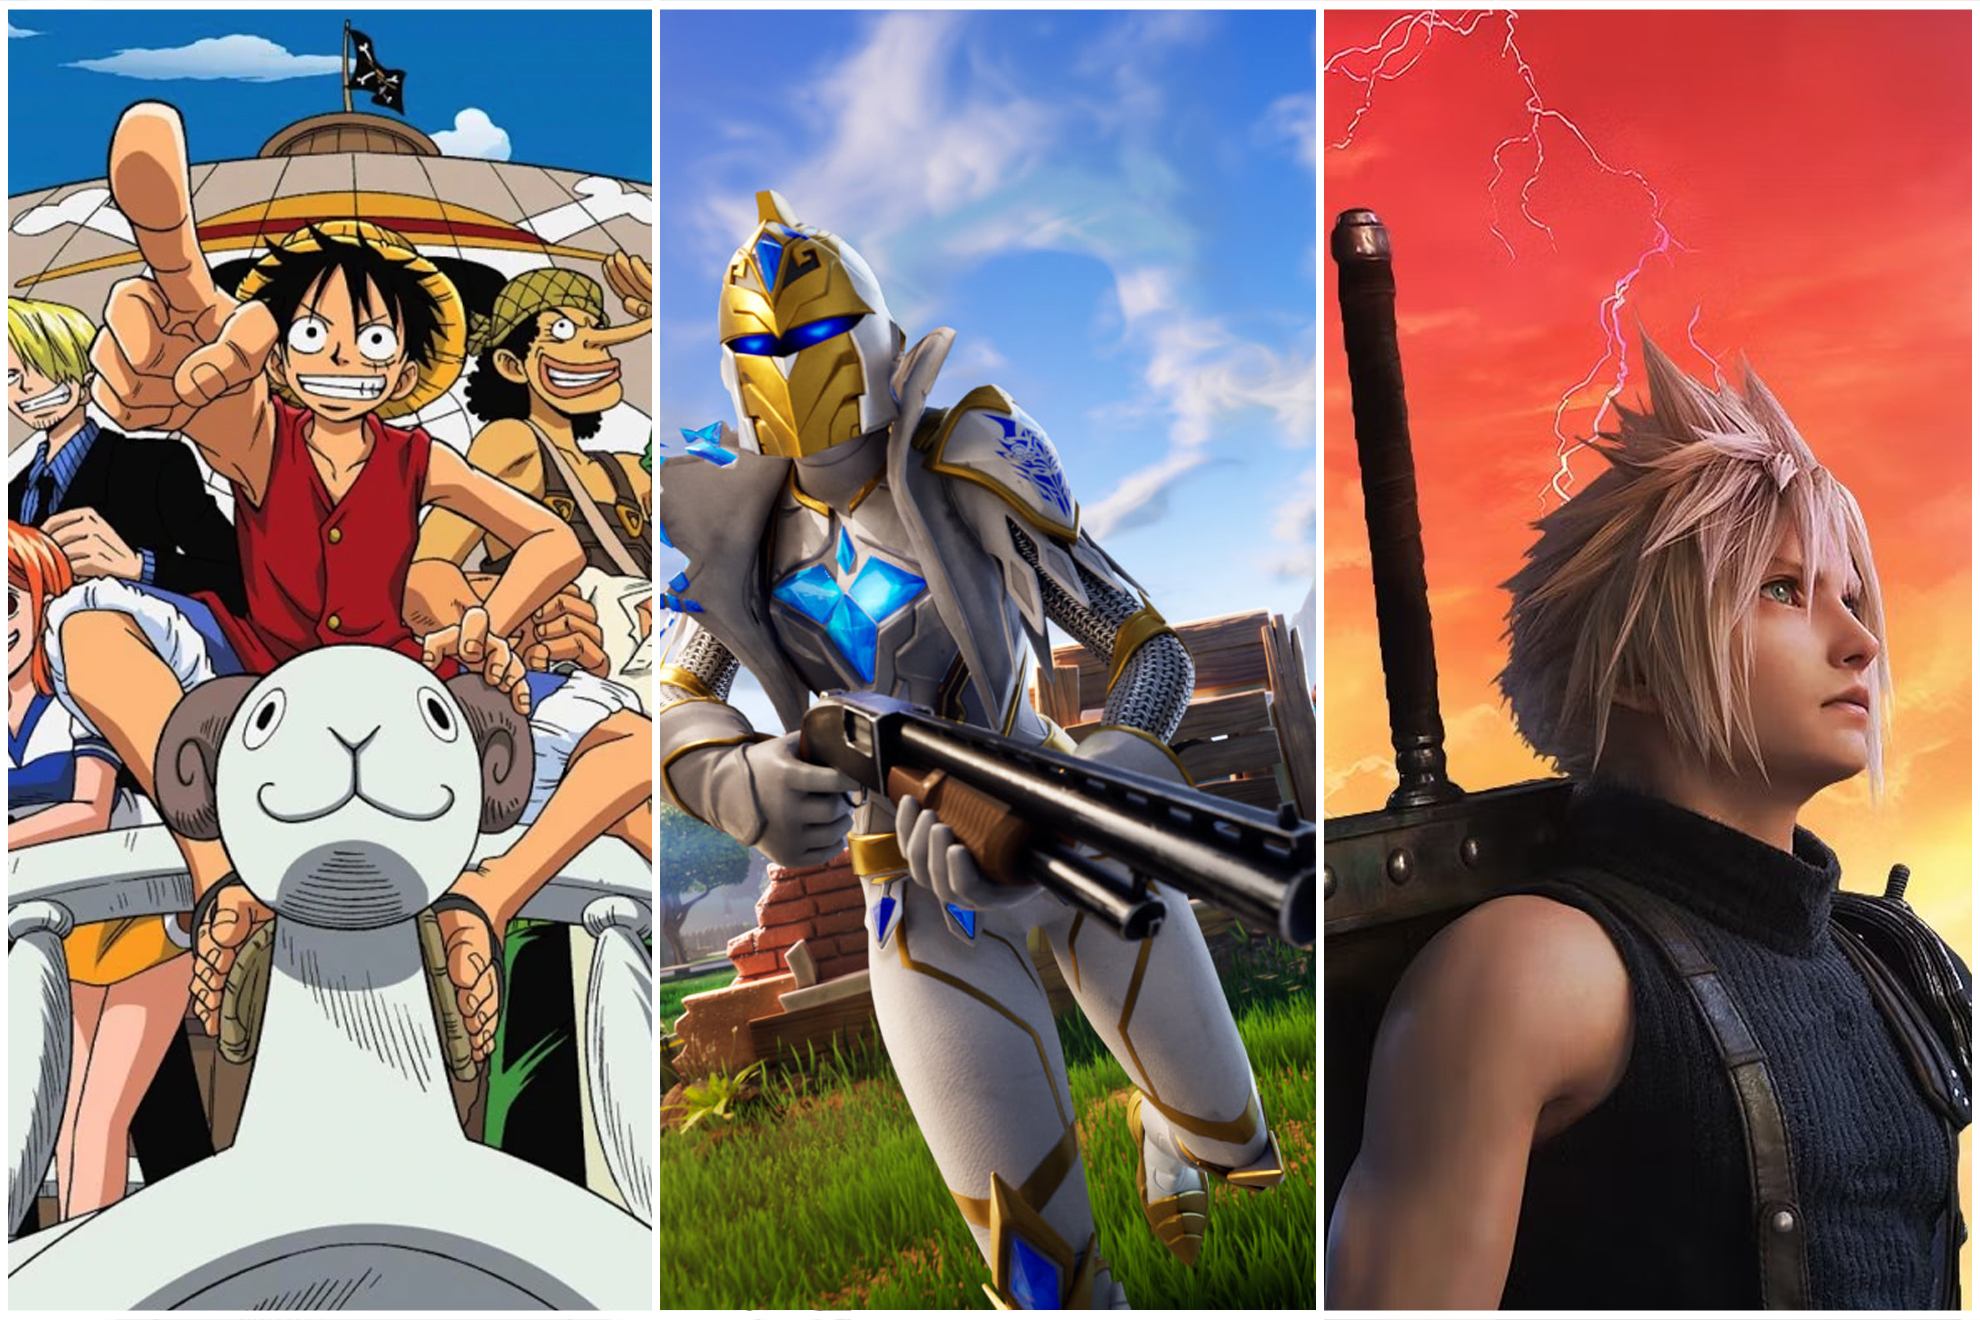 Final Fantasy 7 y One Piece podran llegar a Fortnite segn diversos rumores